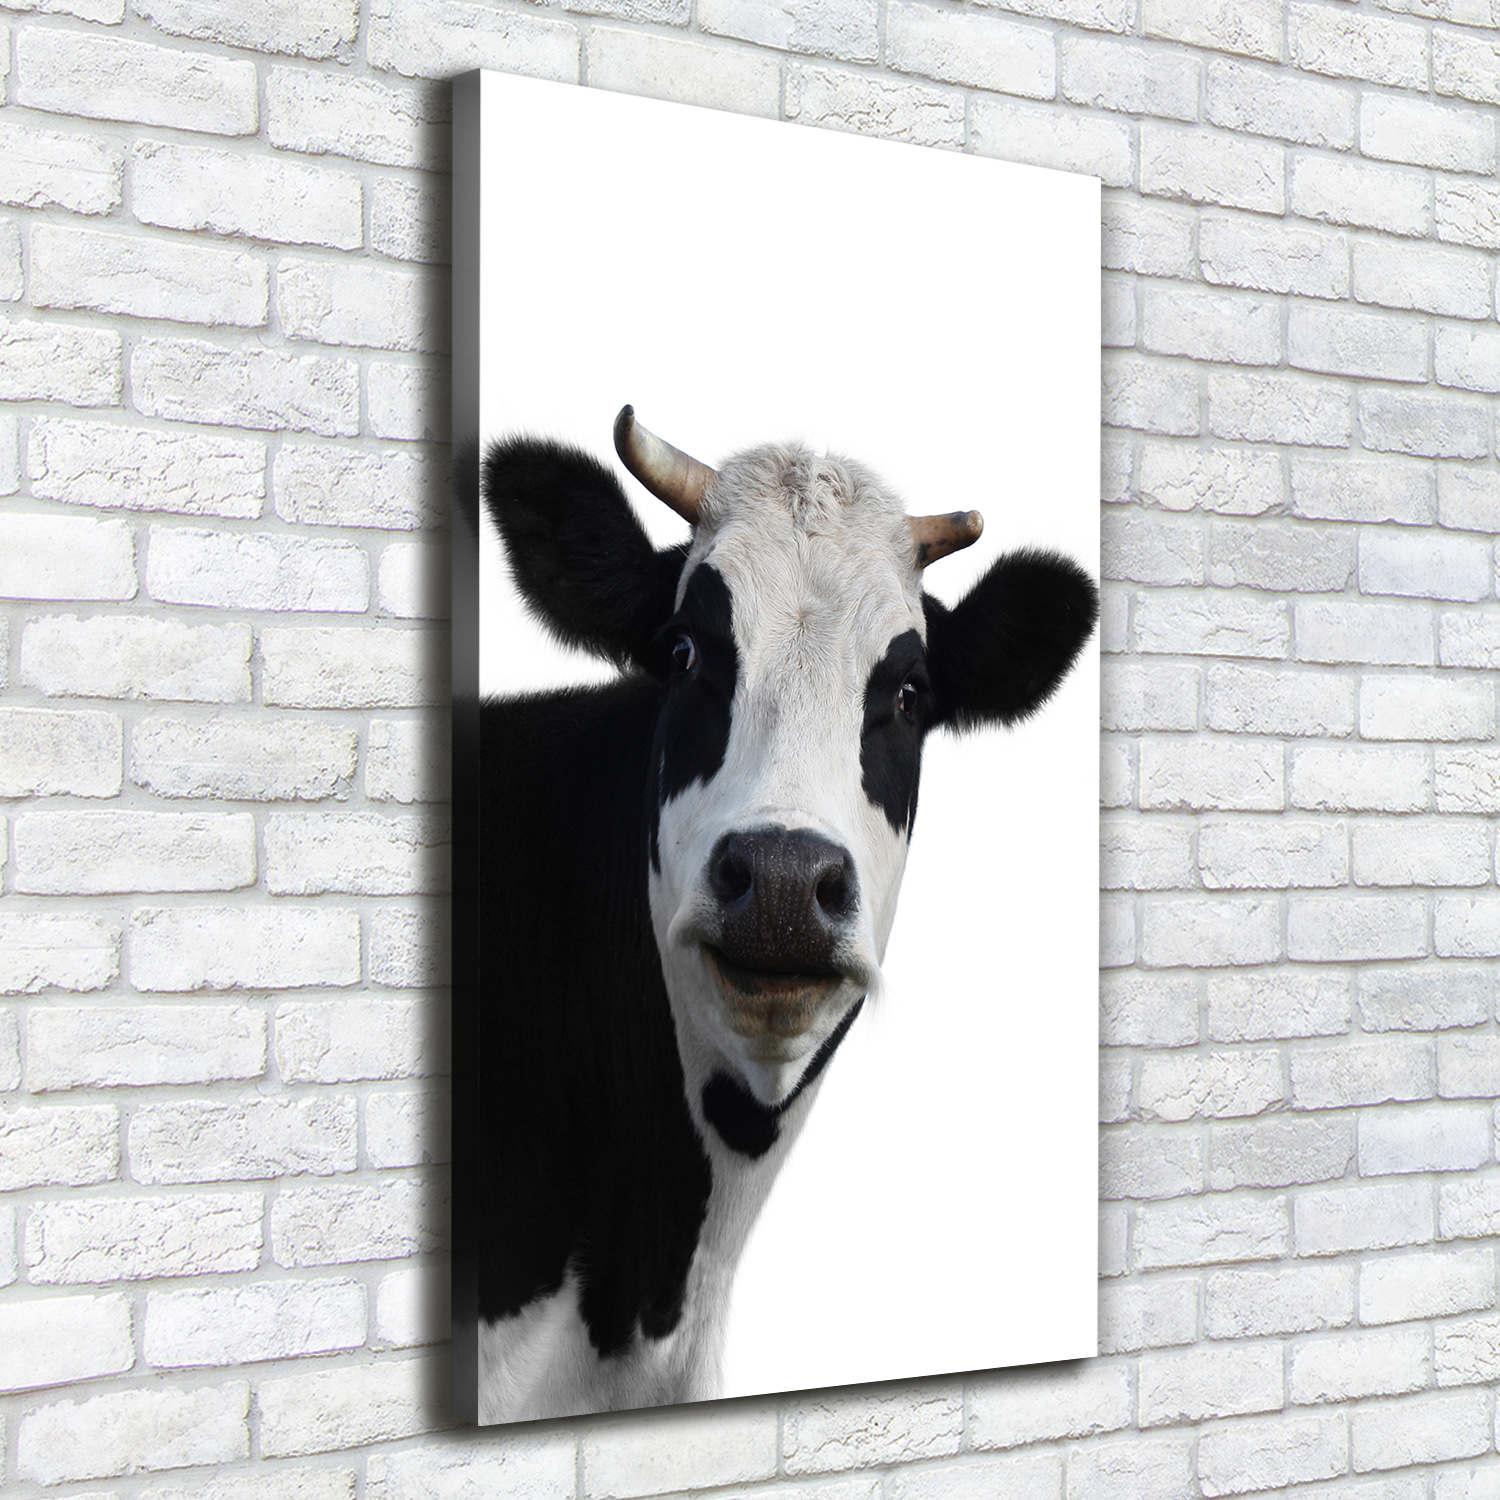 49+ Kuh bilder auf leinwand , LeinwandBild Kunstdruck Hochformat 50x100 Bilder Kuh eBay